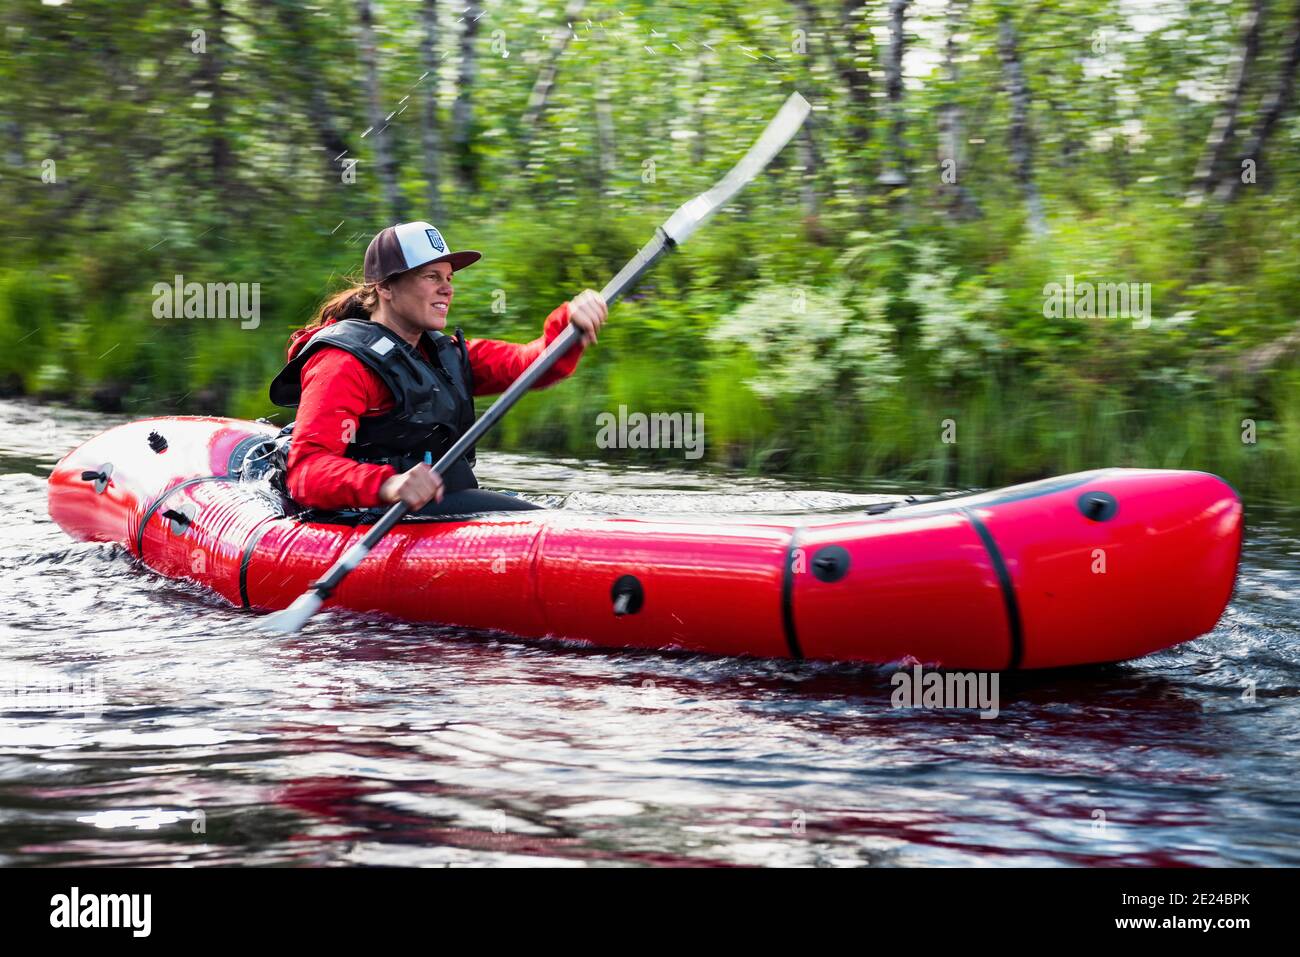 Woman kayaking on river Stock Photo